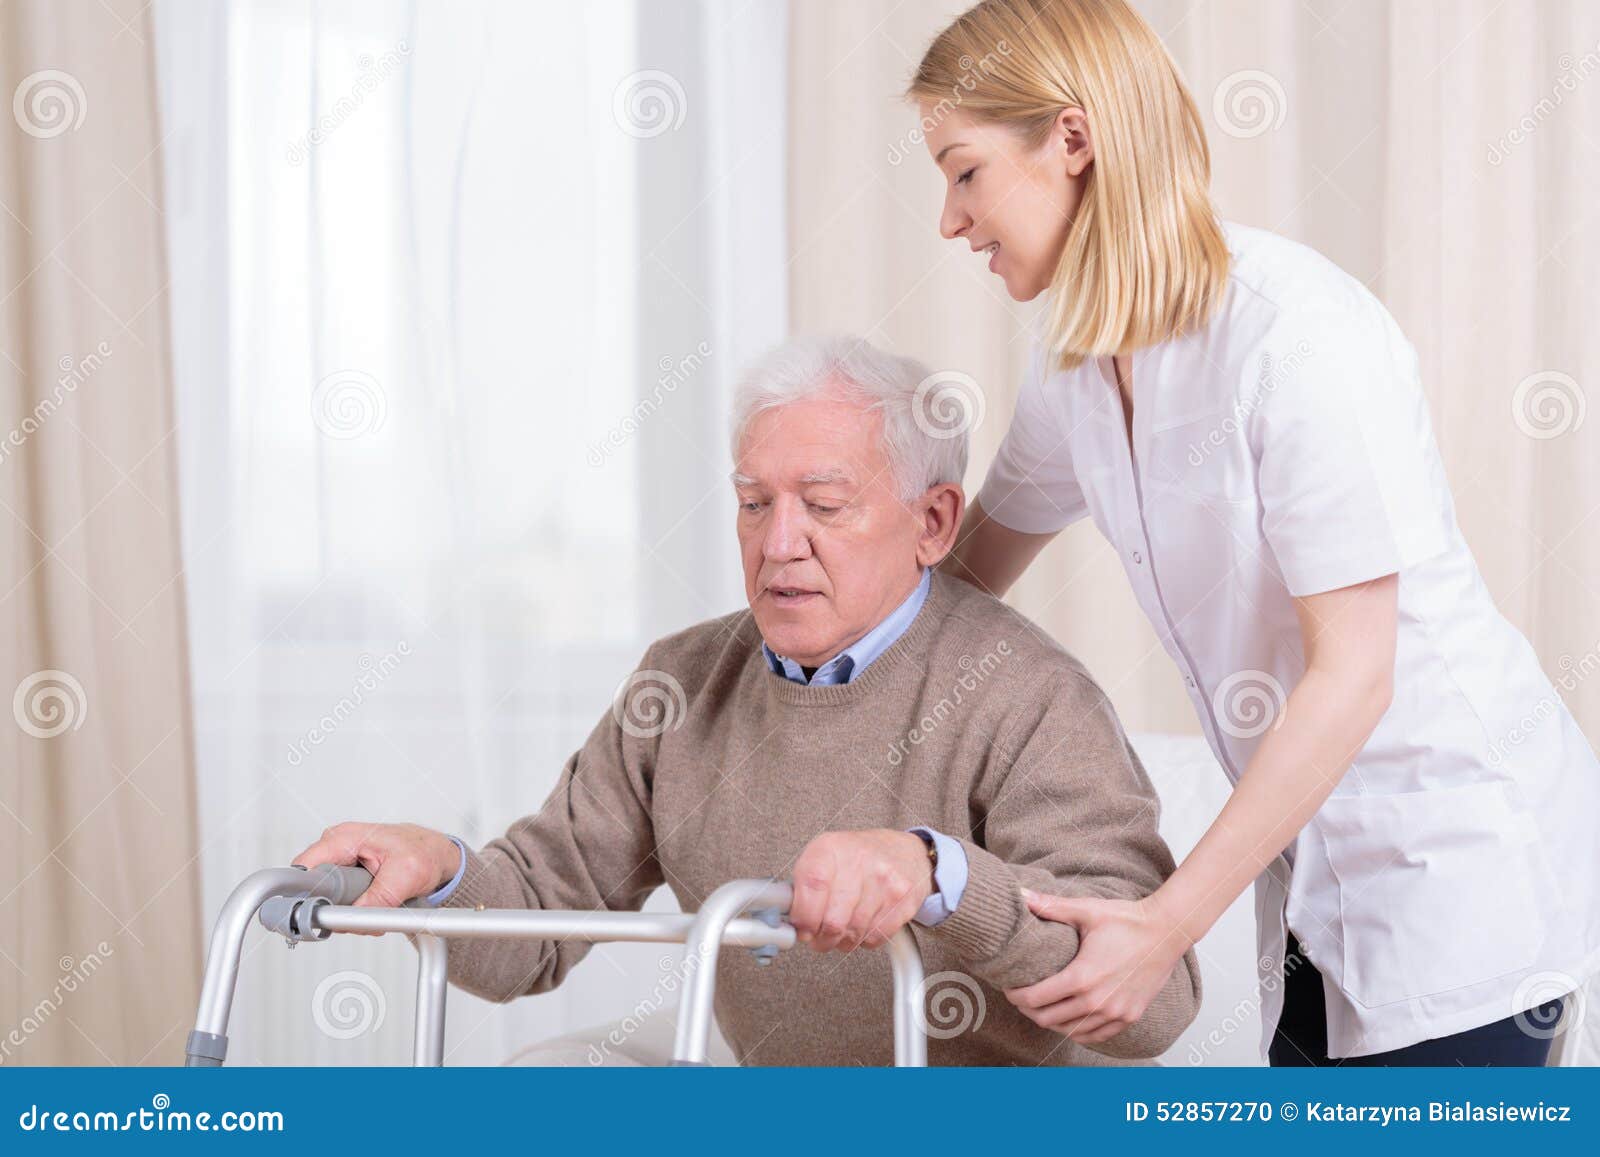 rehabilitation in nursing home